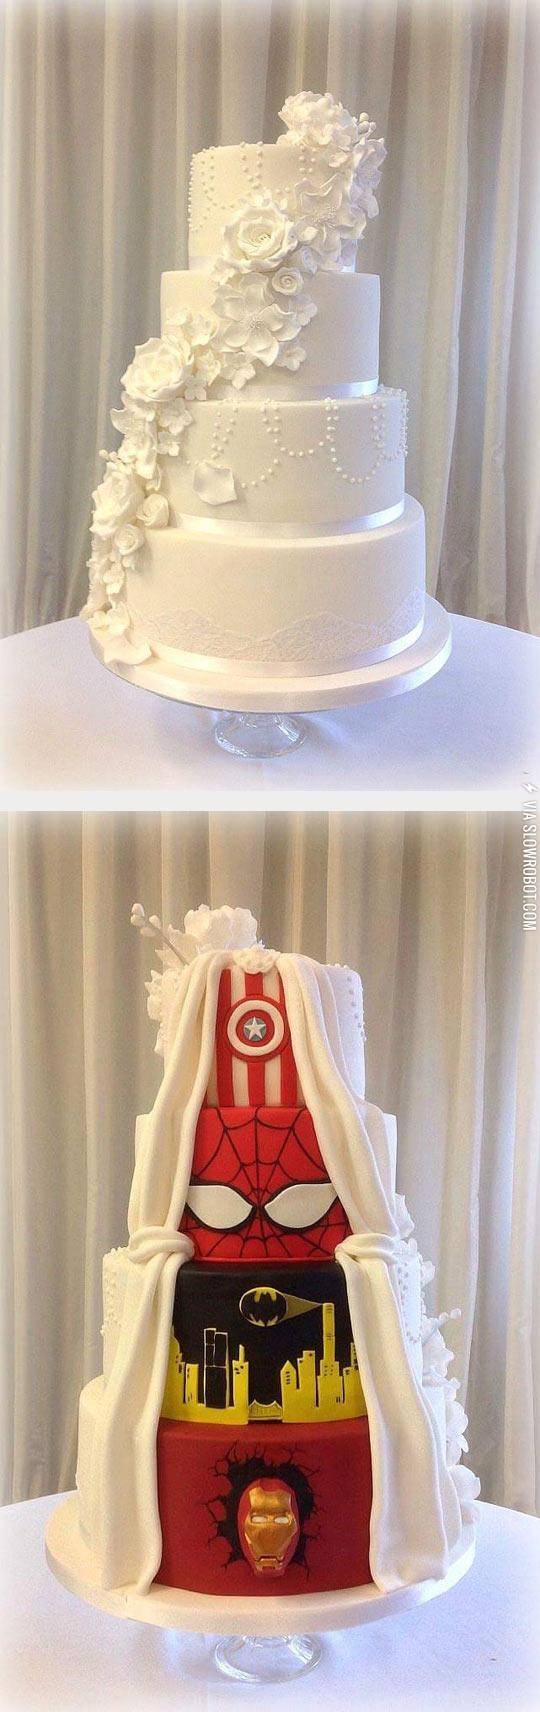 Dual+Wedding+Cake